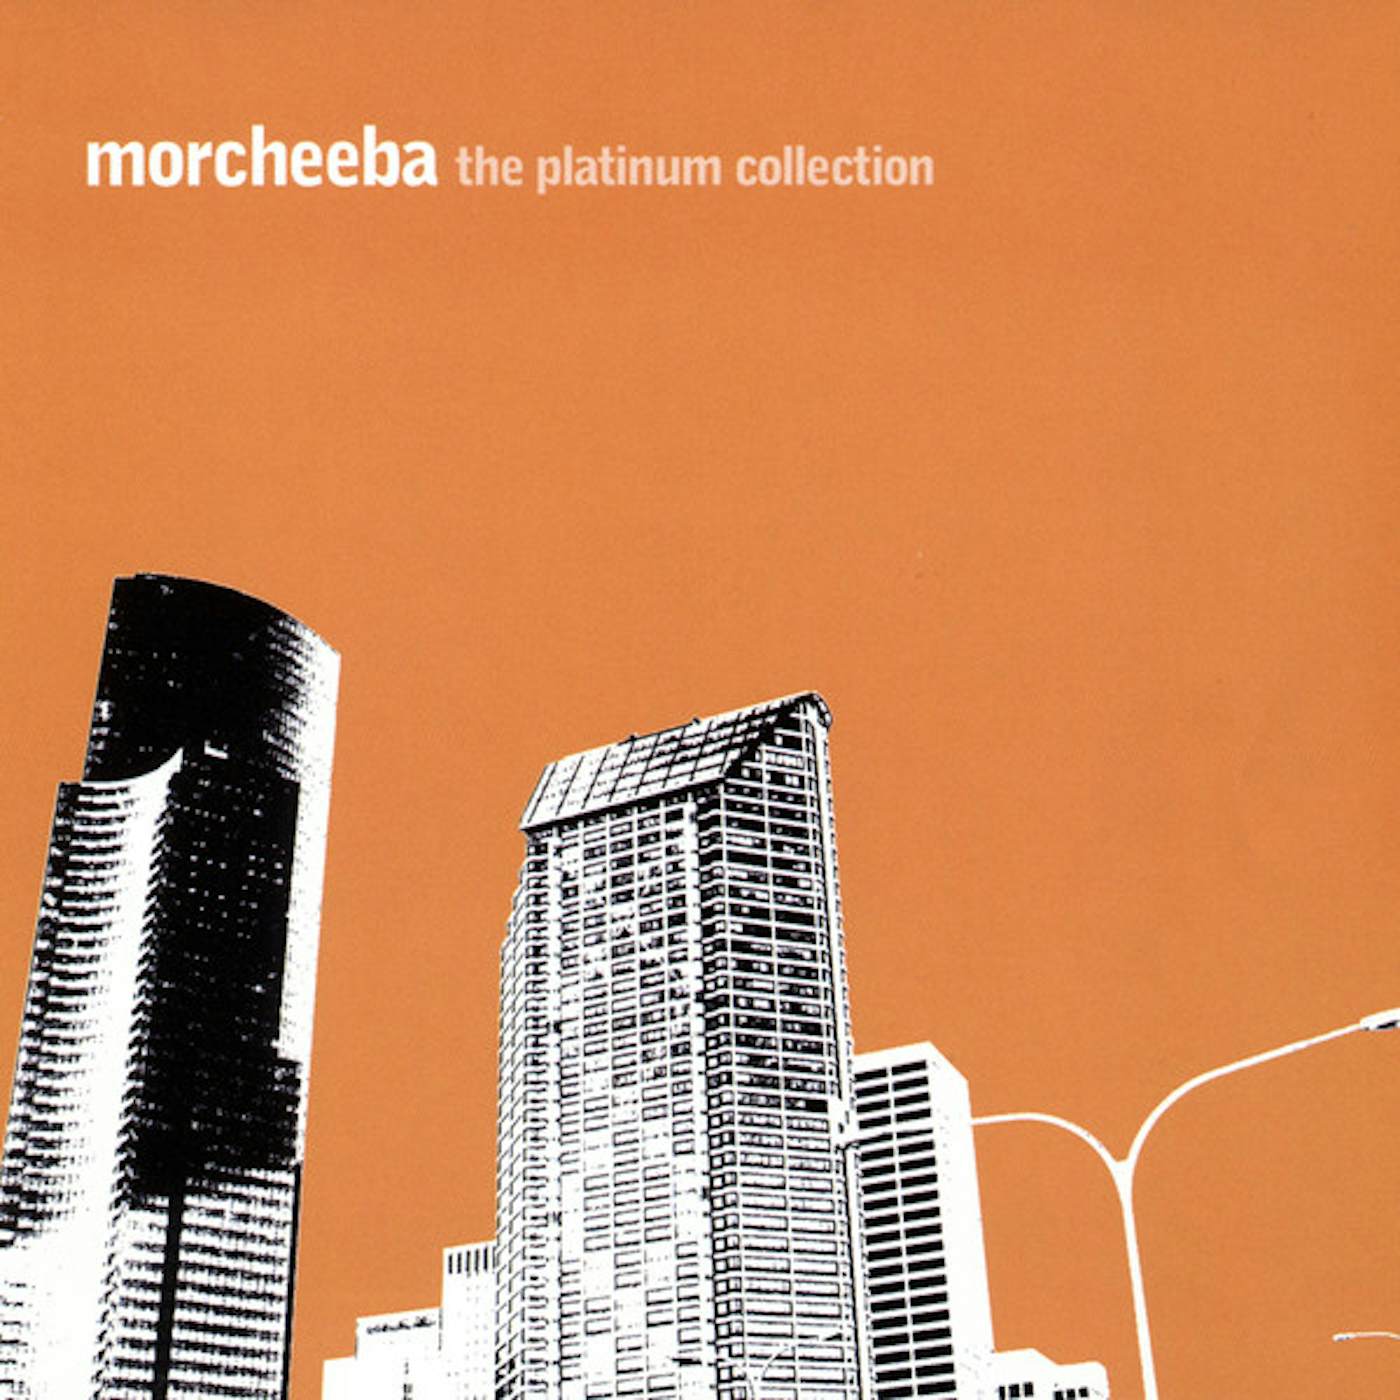 Morcheeba PLATINUM COLLECTION CD